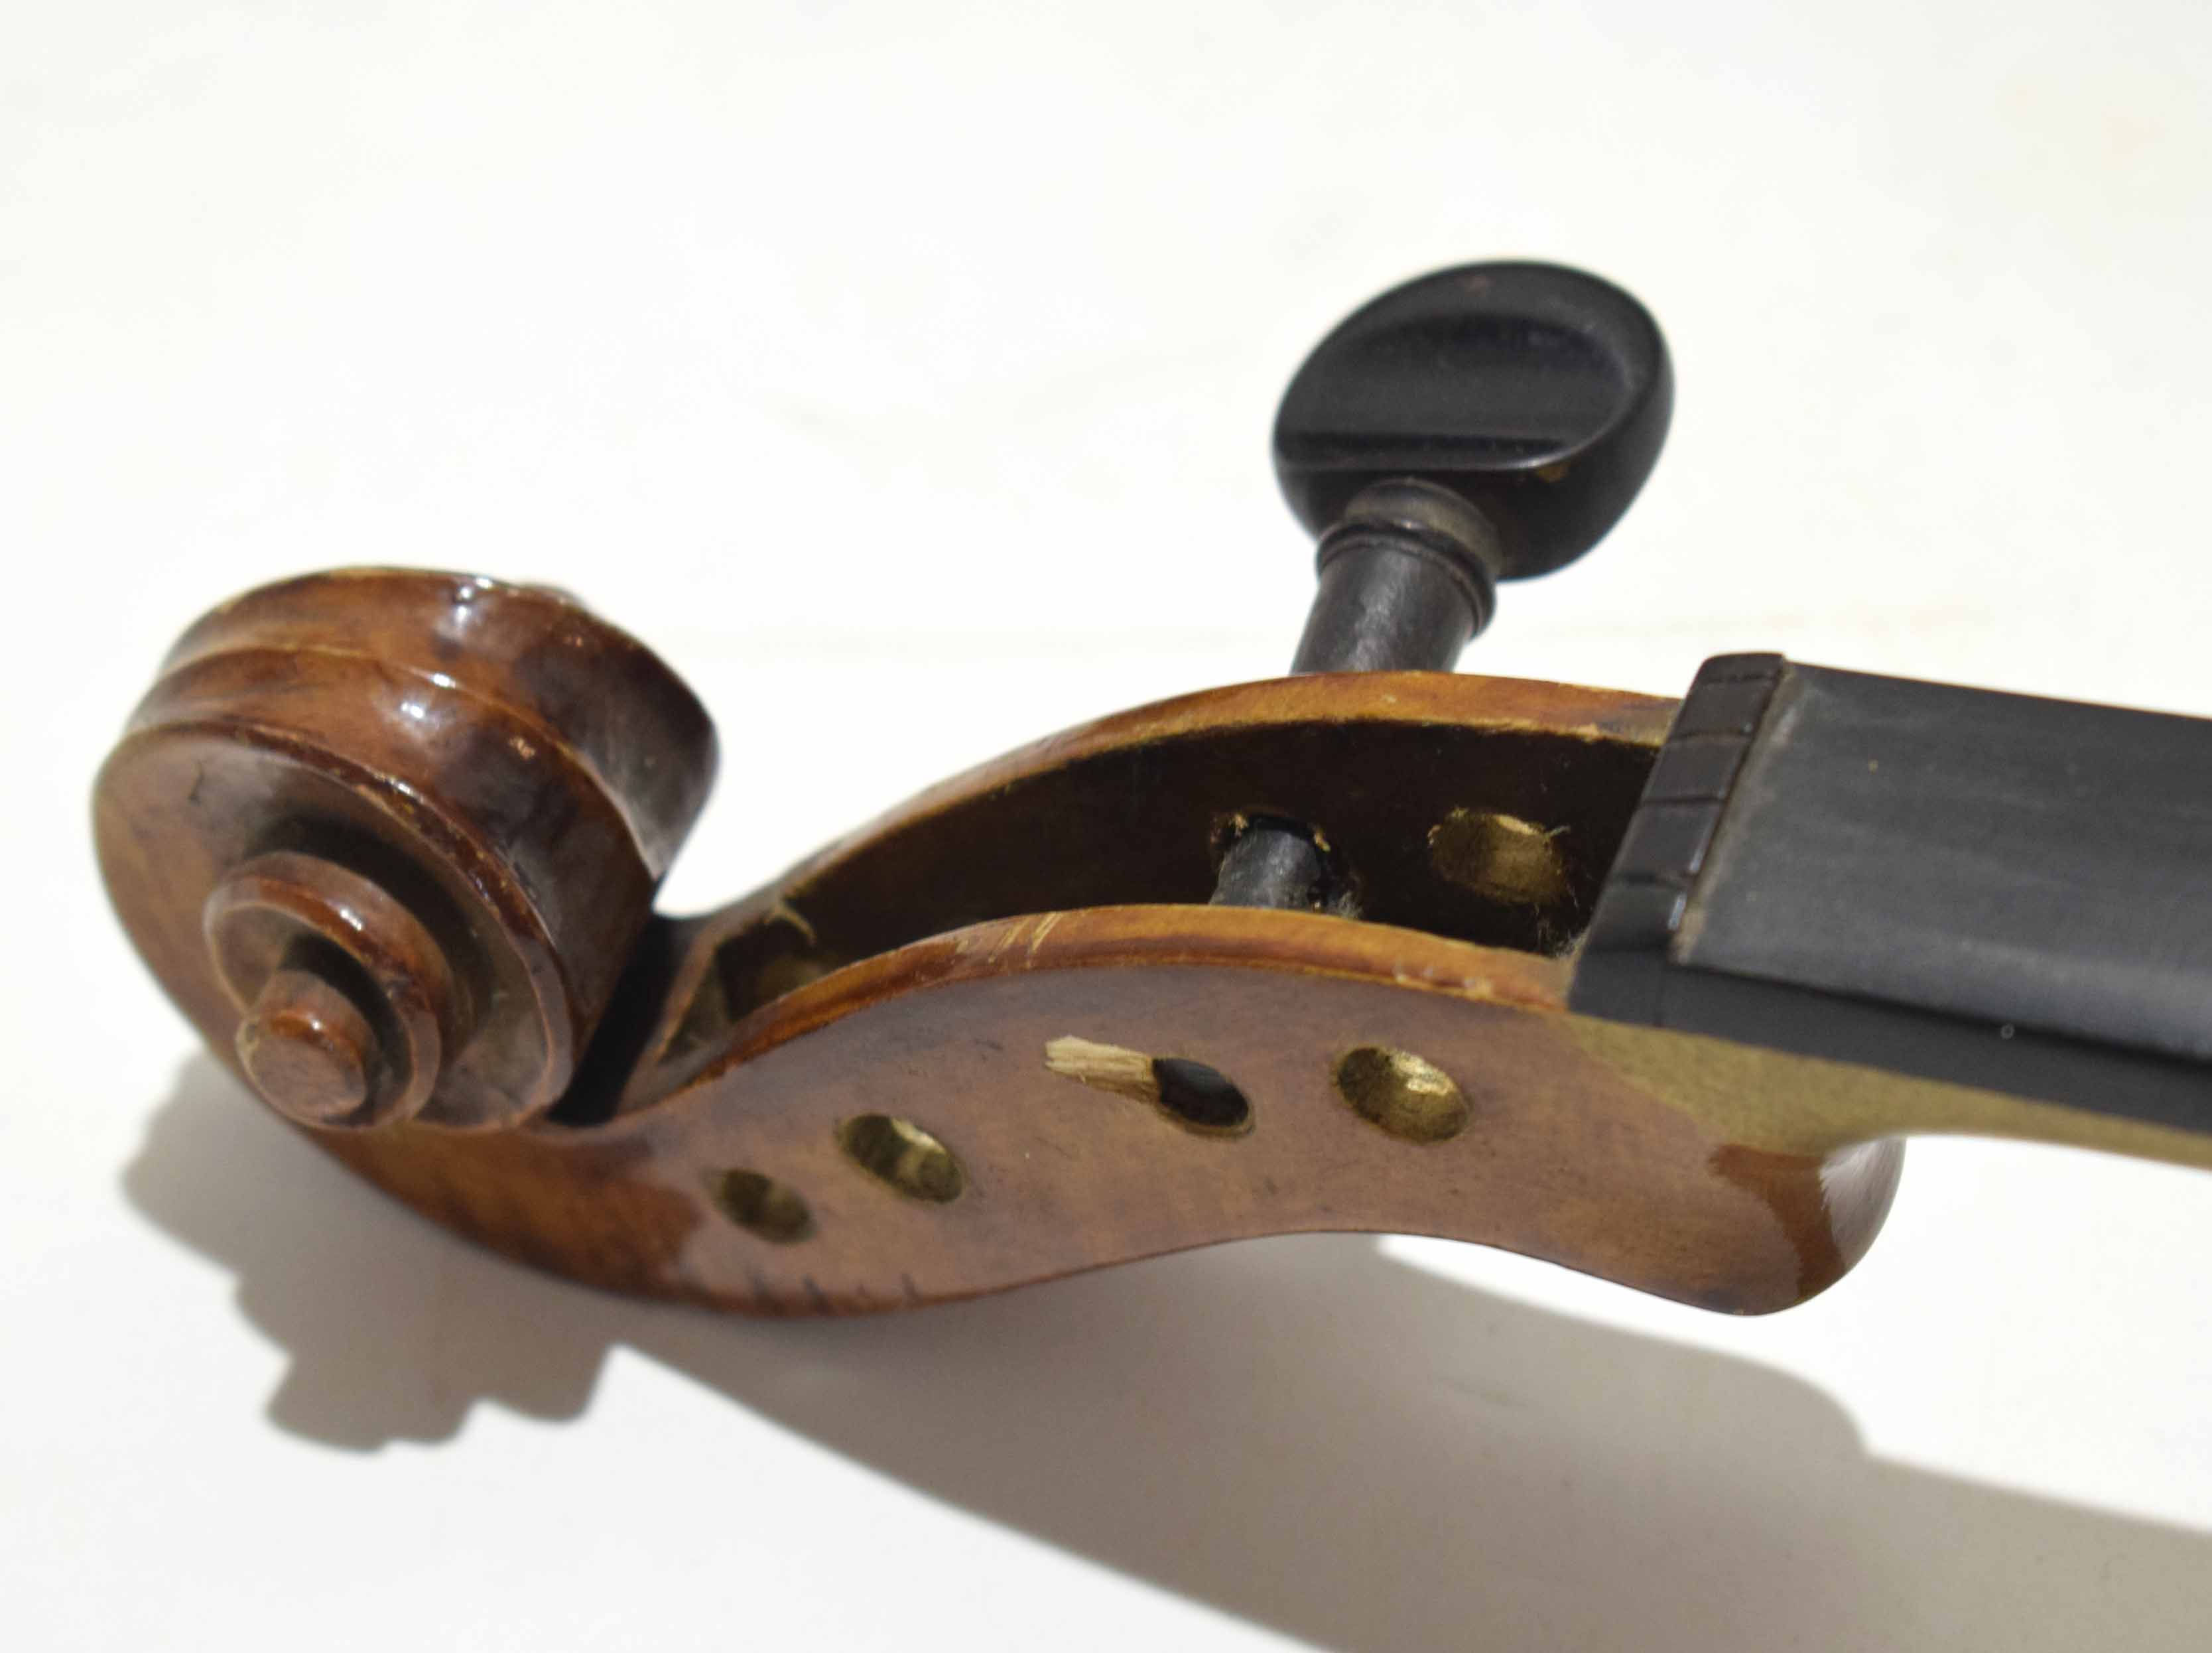 Vintage ebonised wooden cased violin and bow (lacking strings) (af) - Image 5 of 7